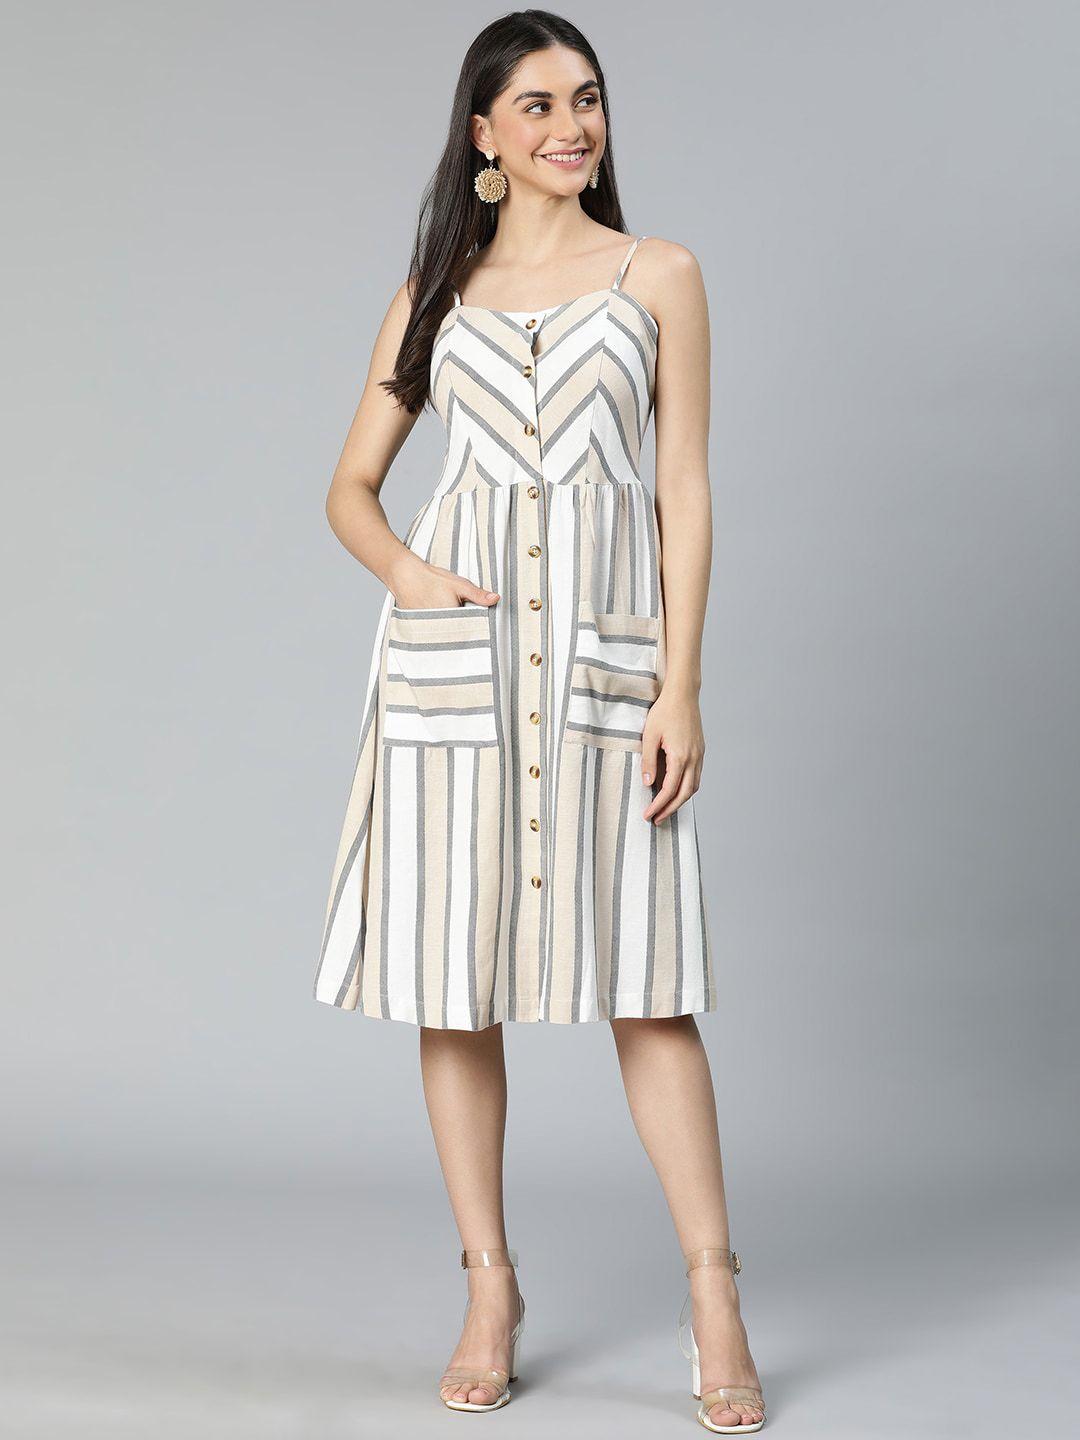 oxolloxo beige striped dress